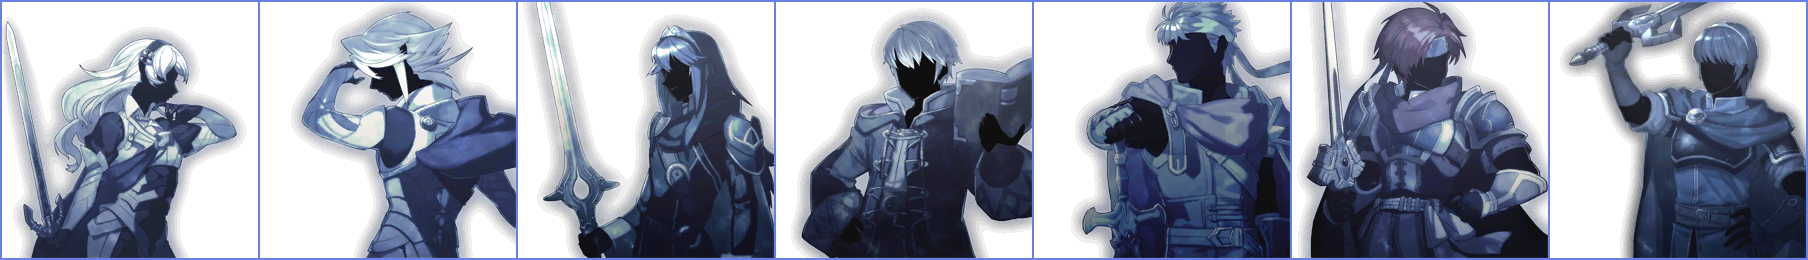 Fire Emblem Echoes: Shadows of Valentia - amiibo Characters